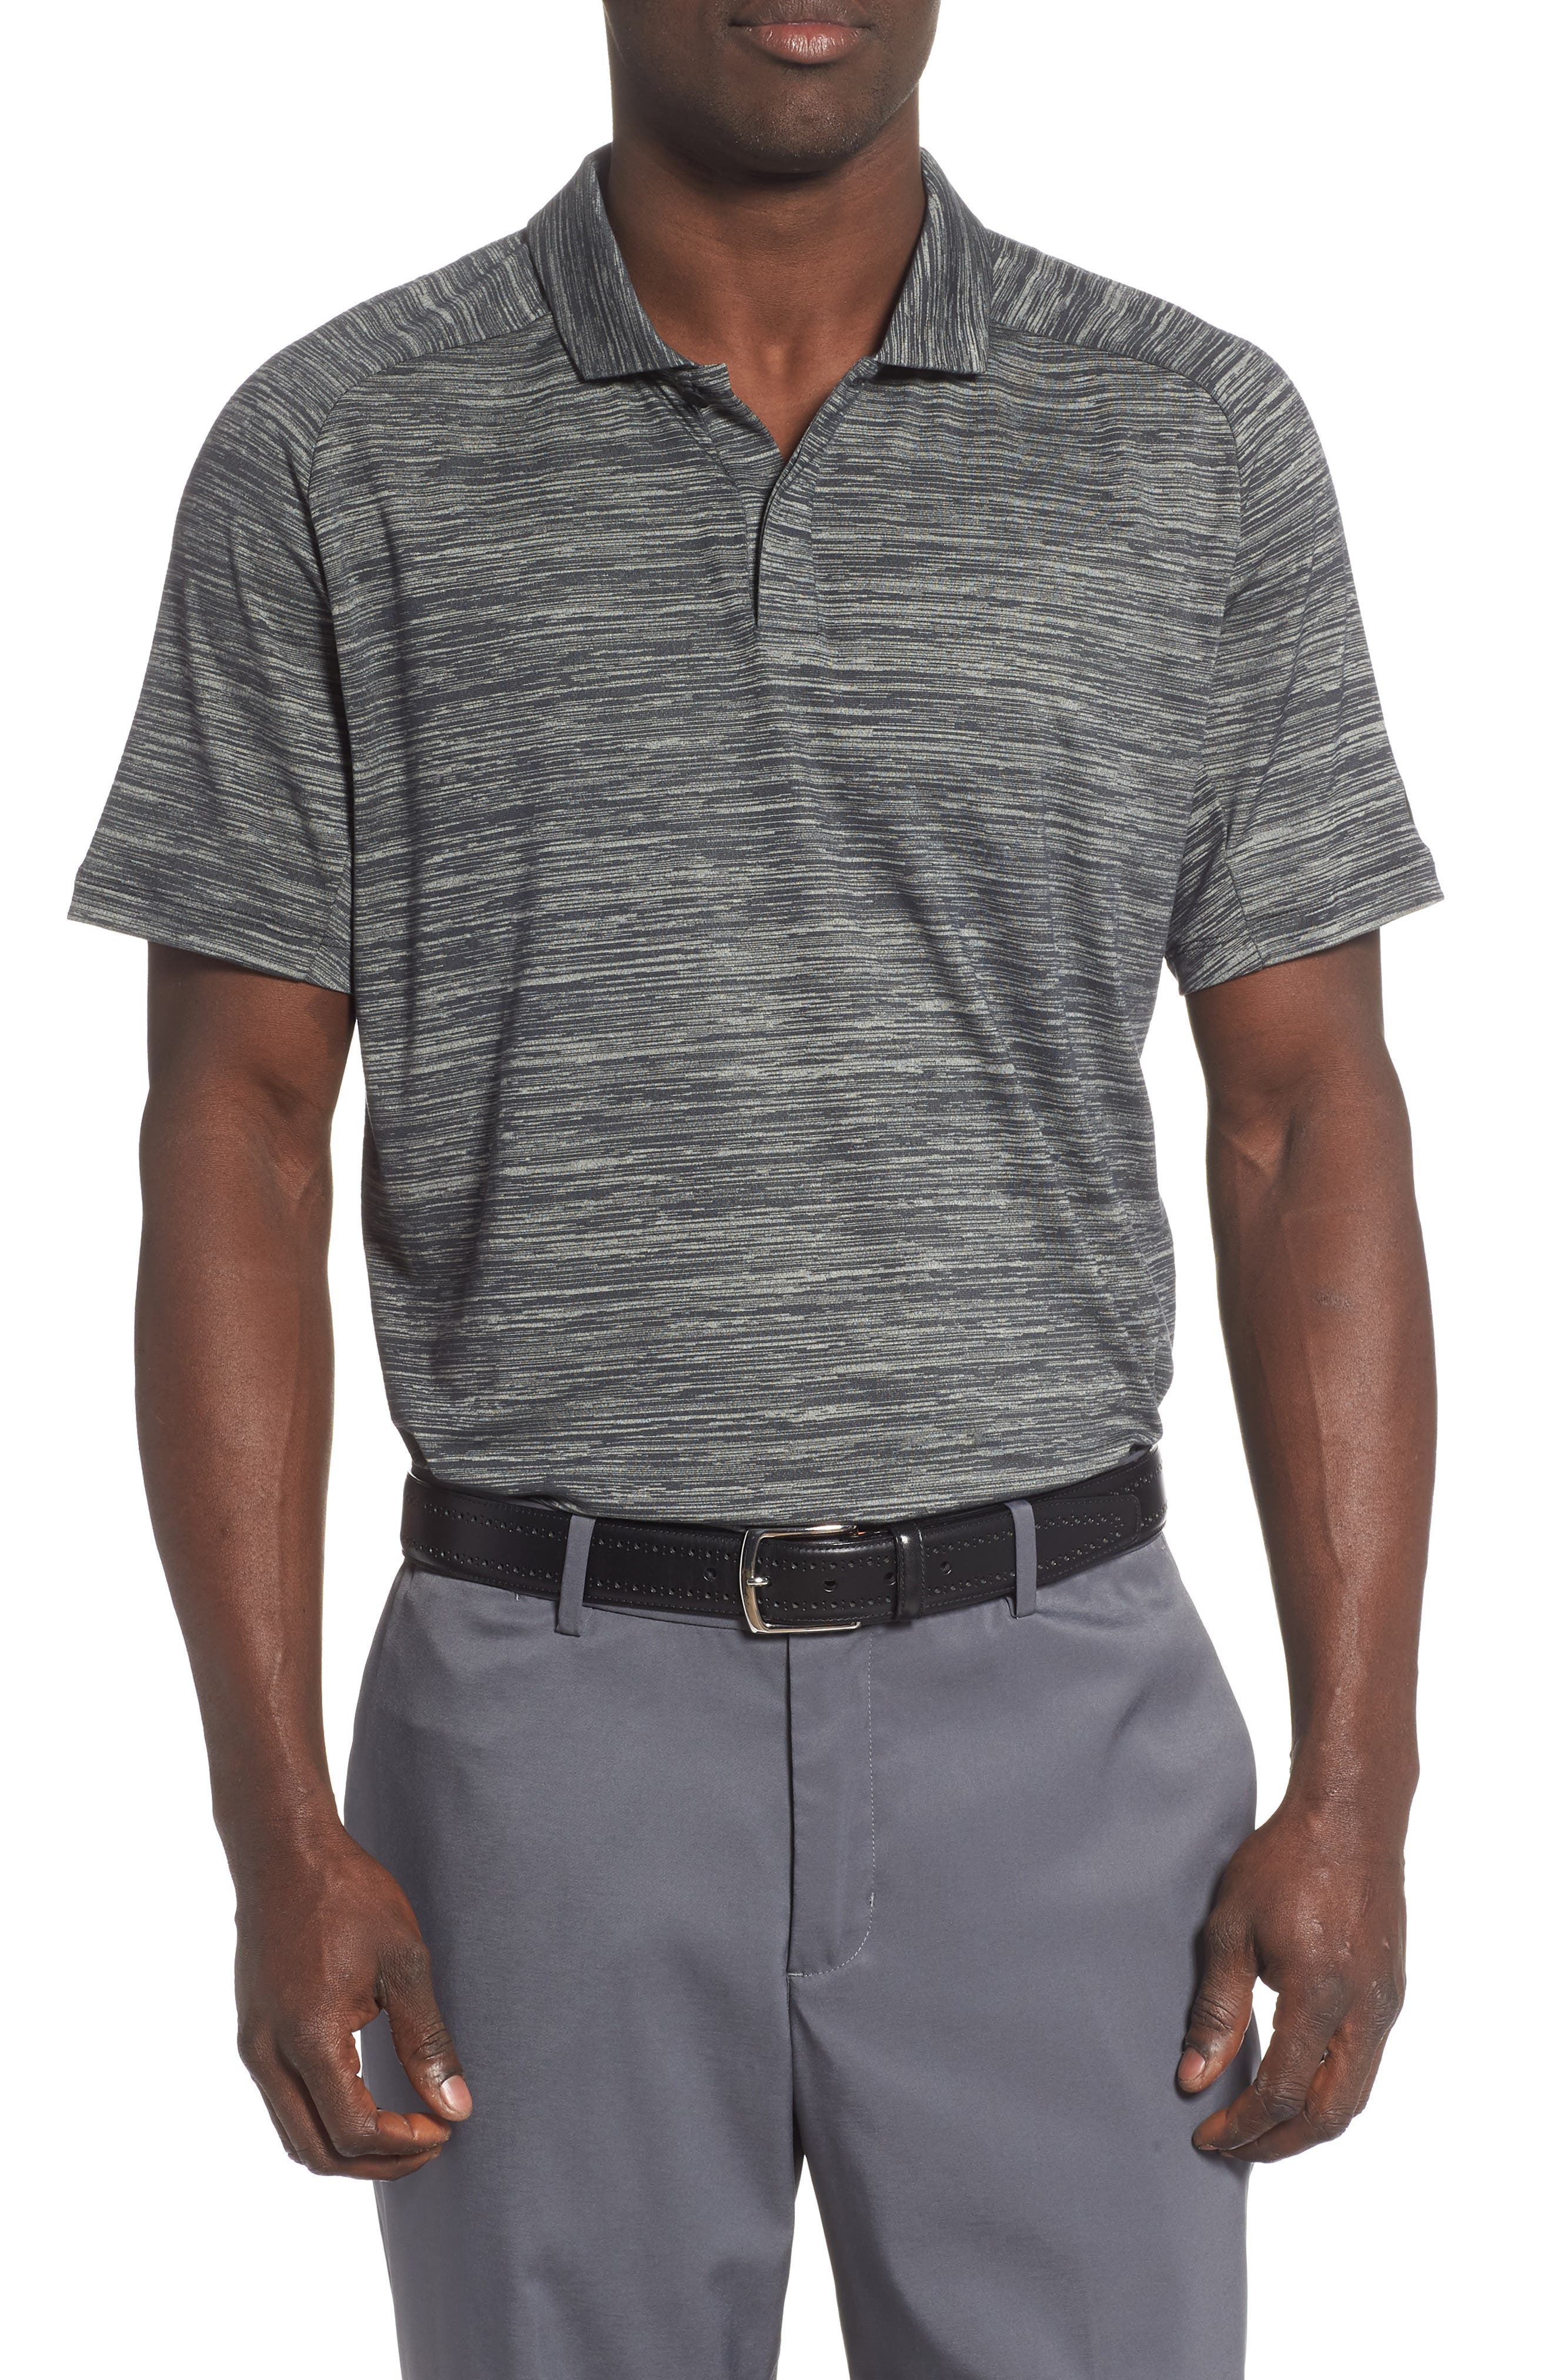 UPC 887226195327 product image for Men's Nike Dry Golf Polo | upcitemdb.com